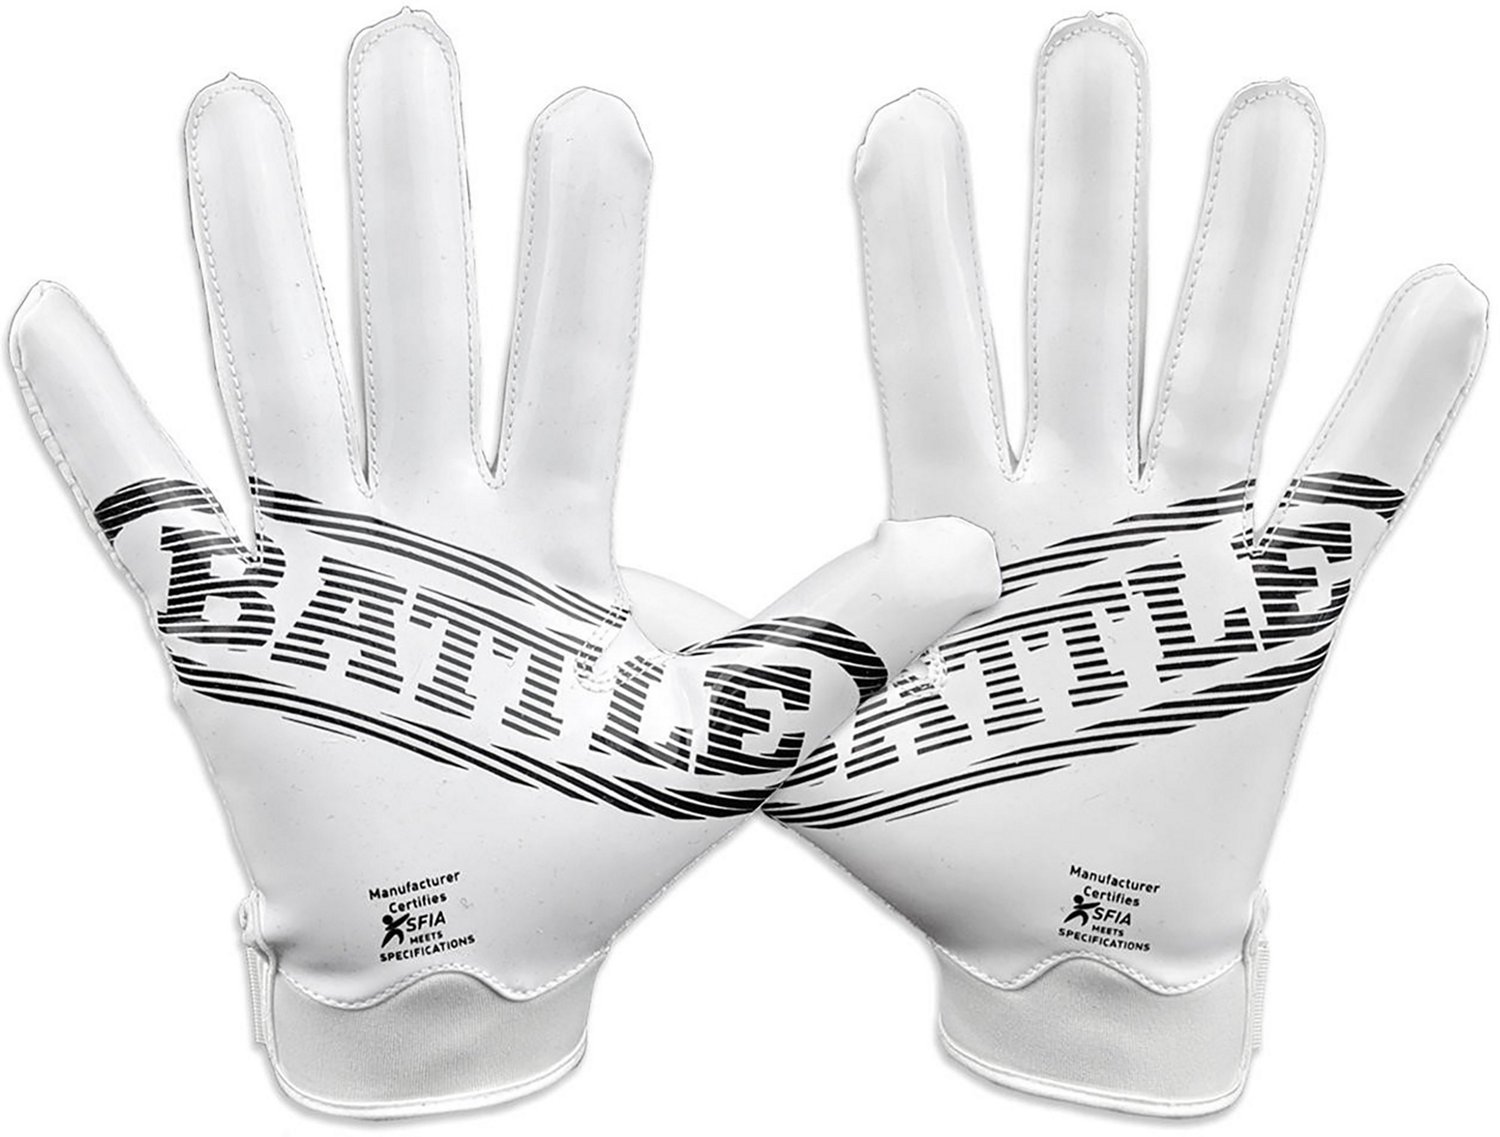 Battle Adults Doom 1.0 Receiver Gloves